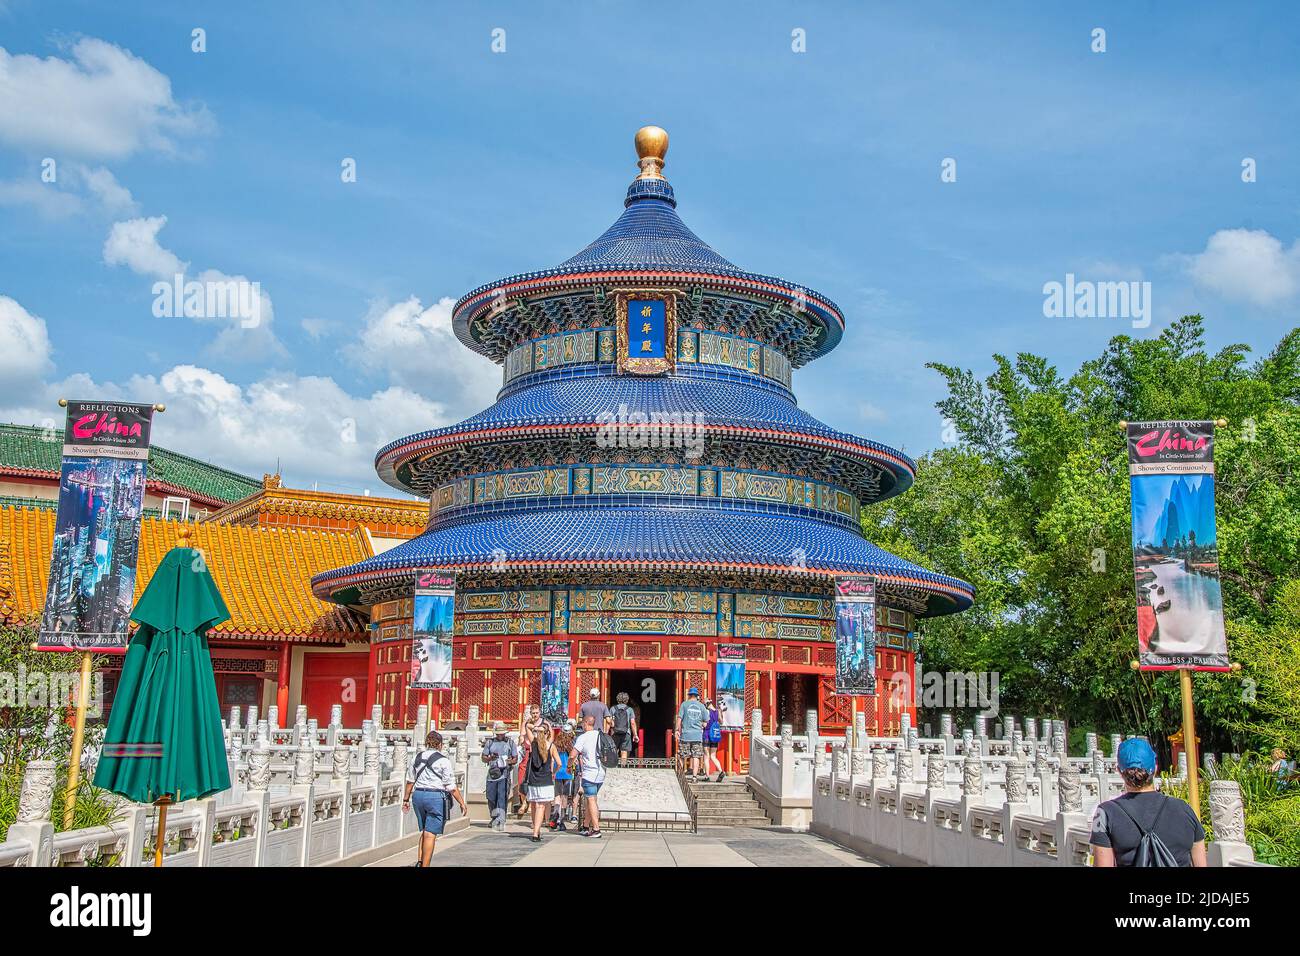 Chinese pavillion at Epcot Disney World Stock Photo